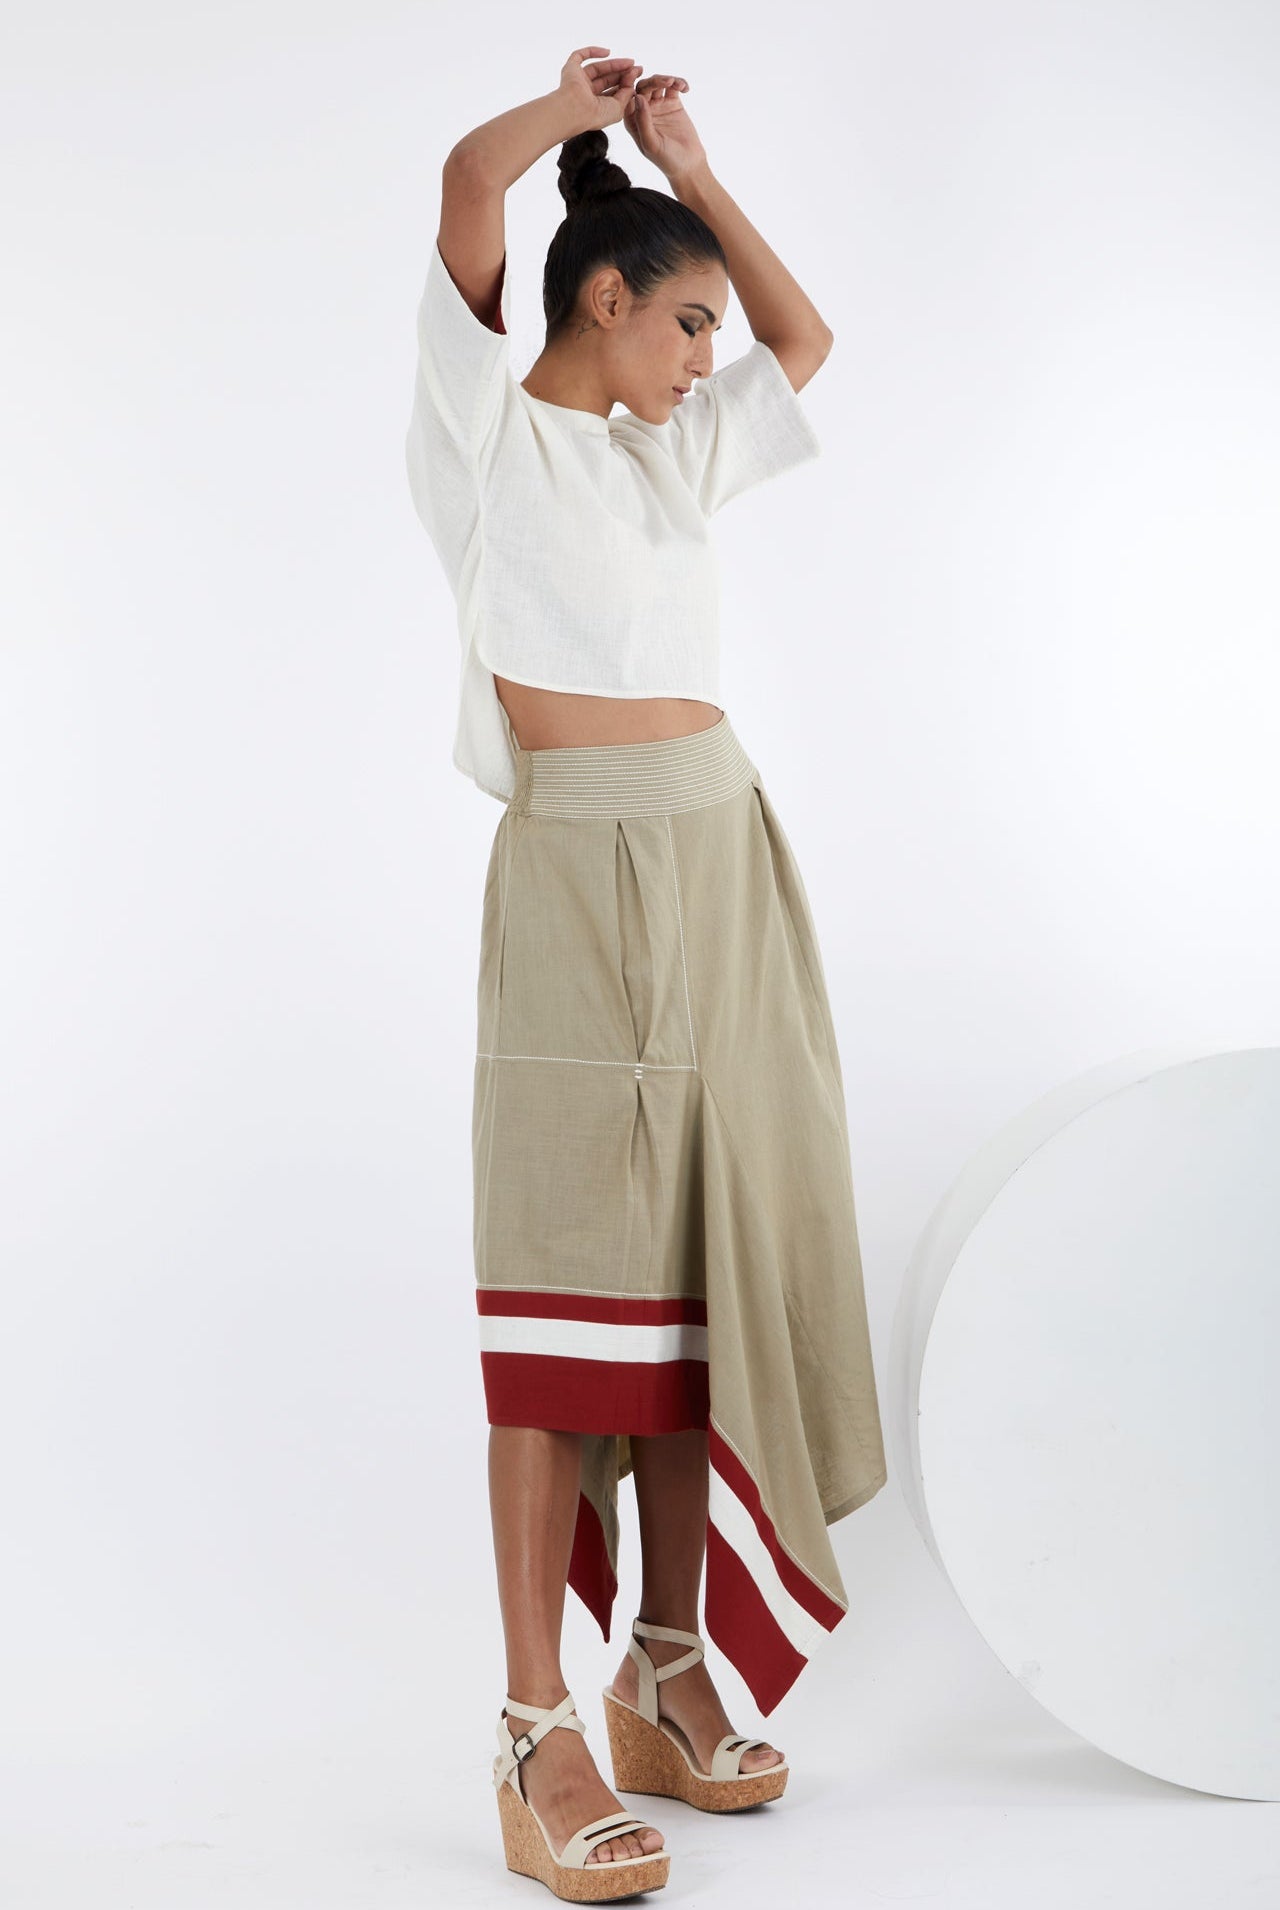 Kazu - Crop Top And Terraced Skirt - CiceroniCo-ord SetMadder Much